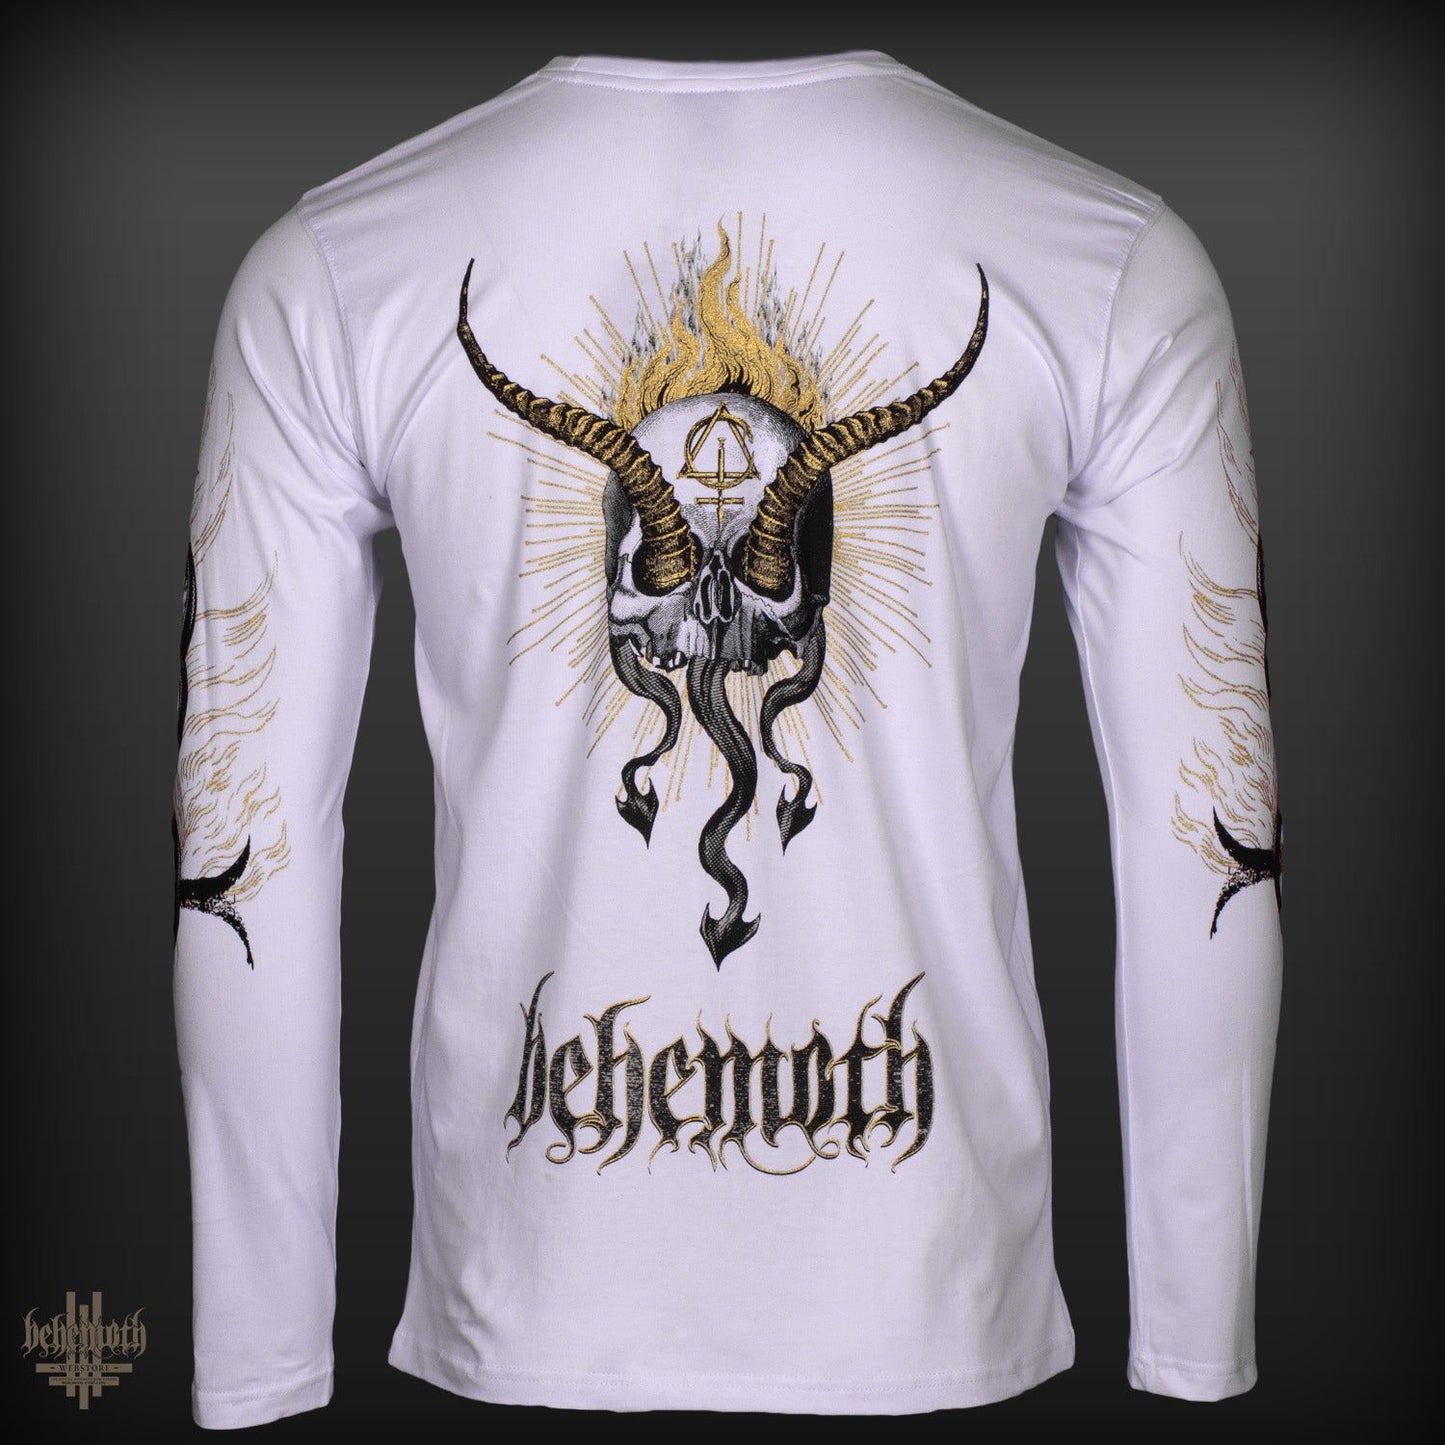 A white Behemoth 'Contra' long sleeve shirt